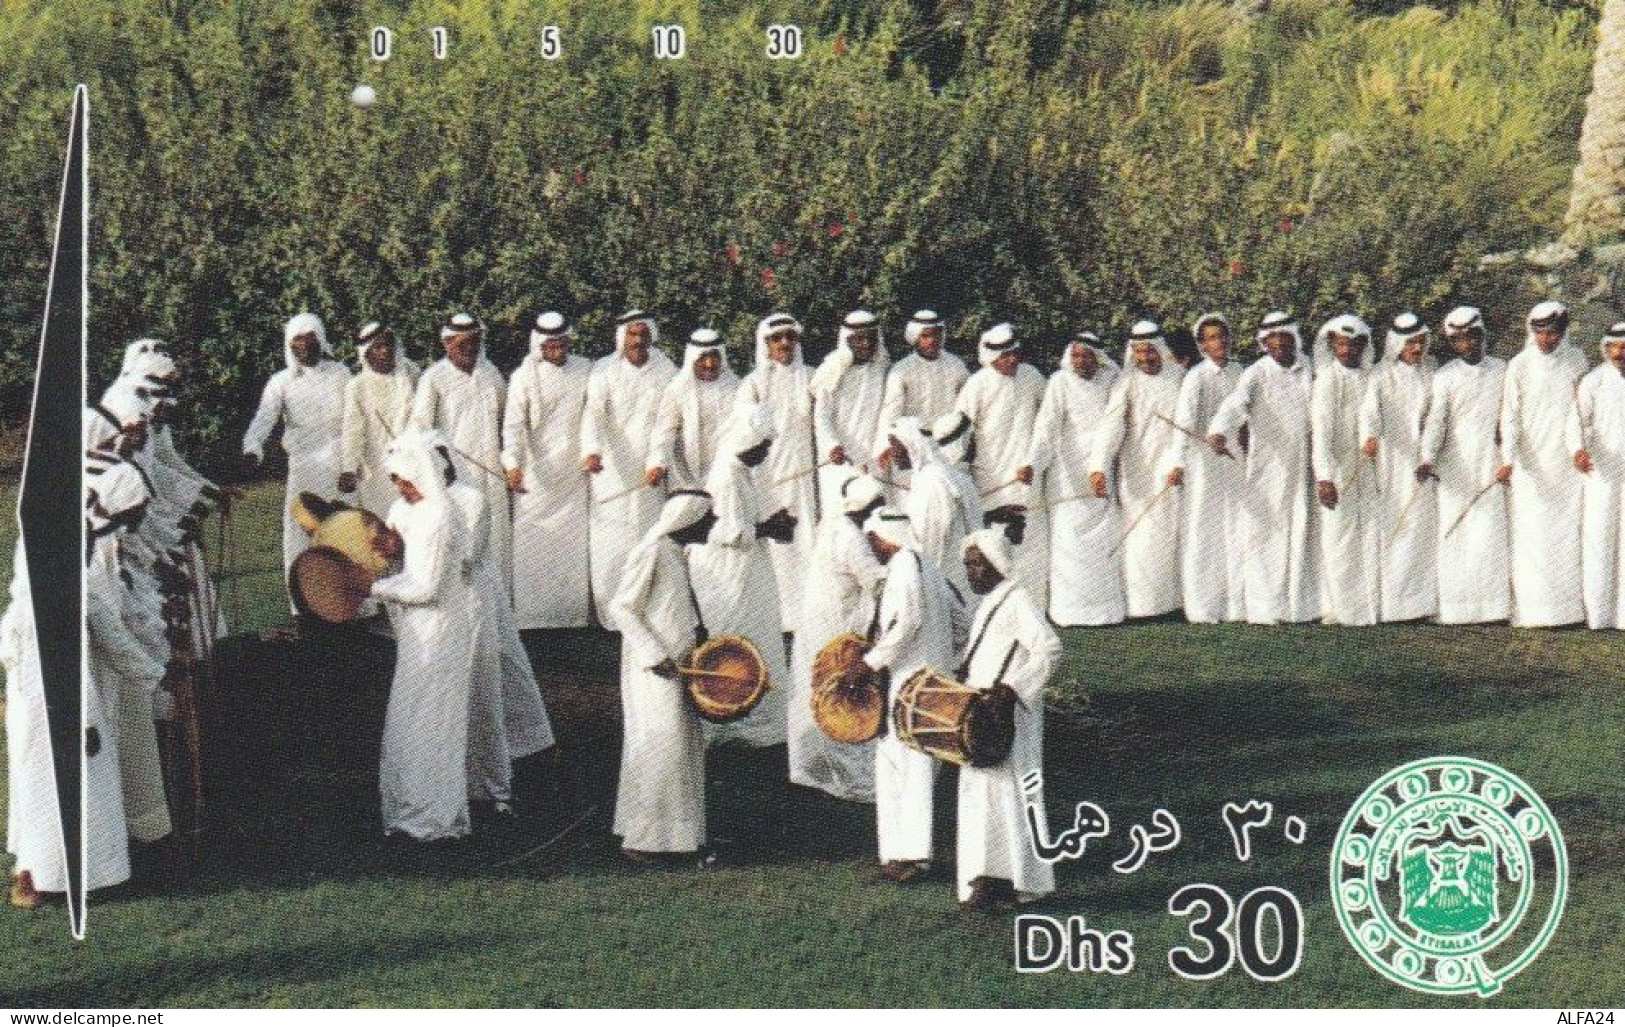 PHONE CARD EMIRATI ARABI (E53.15.6 - Emirats Arabes Unis